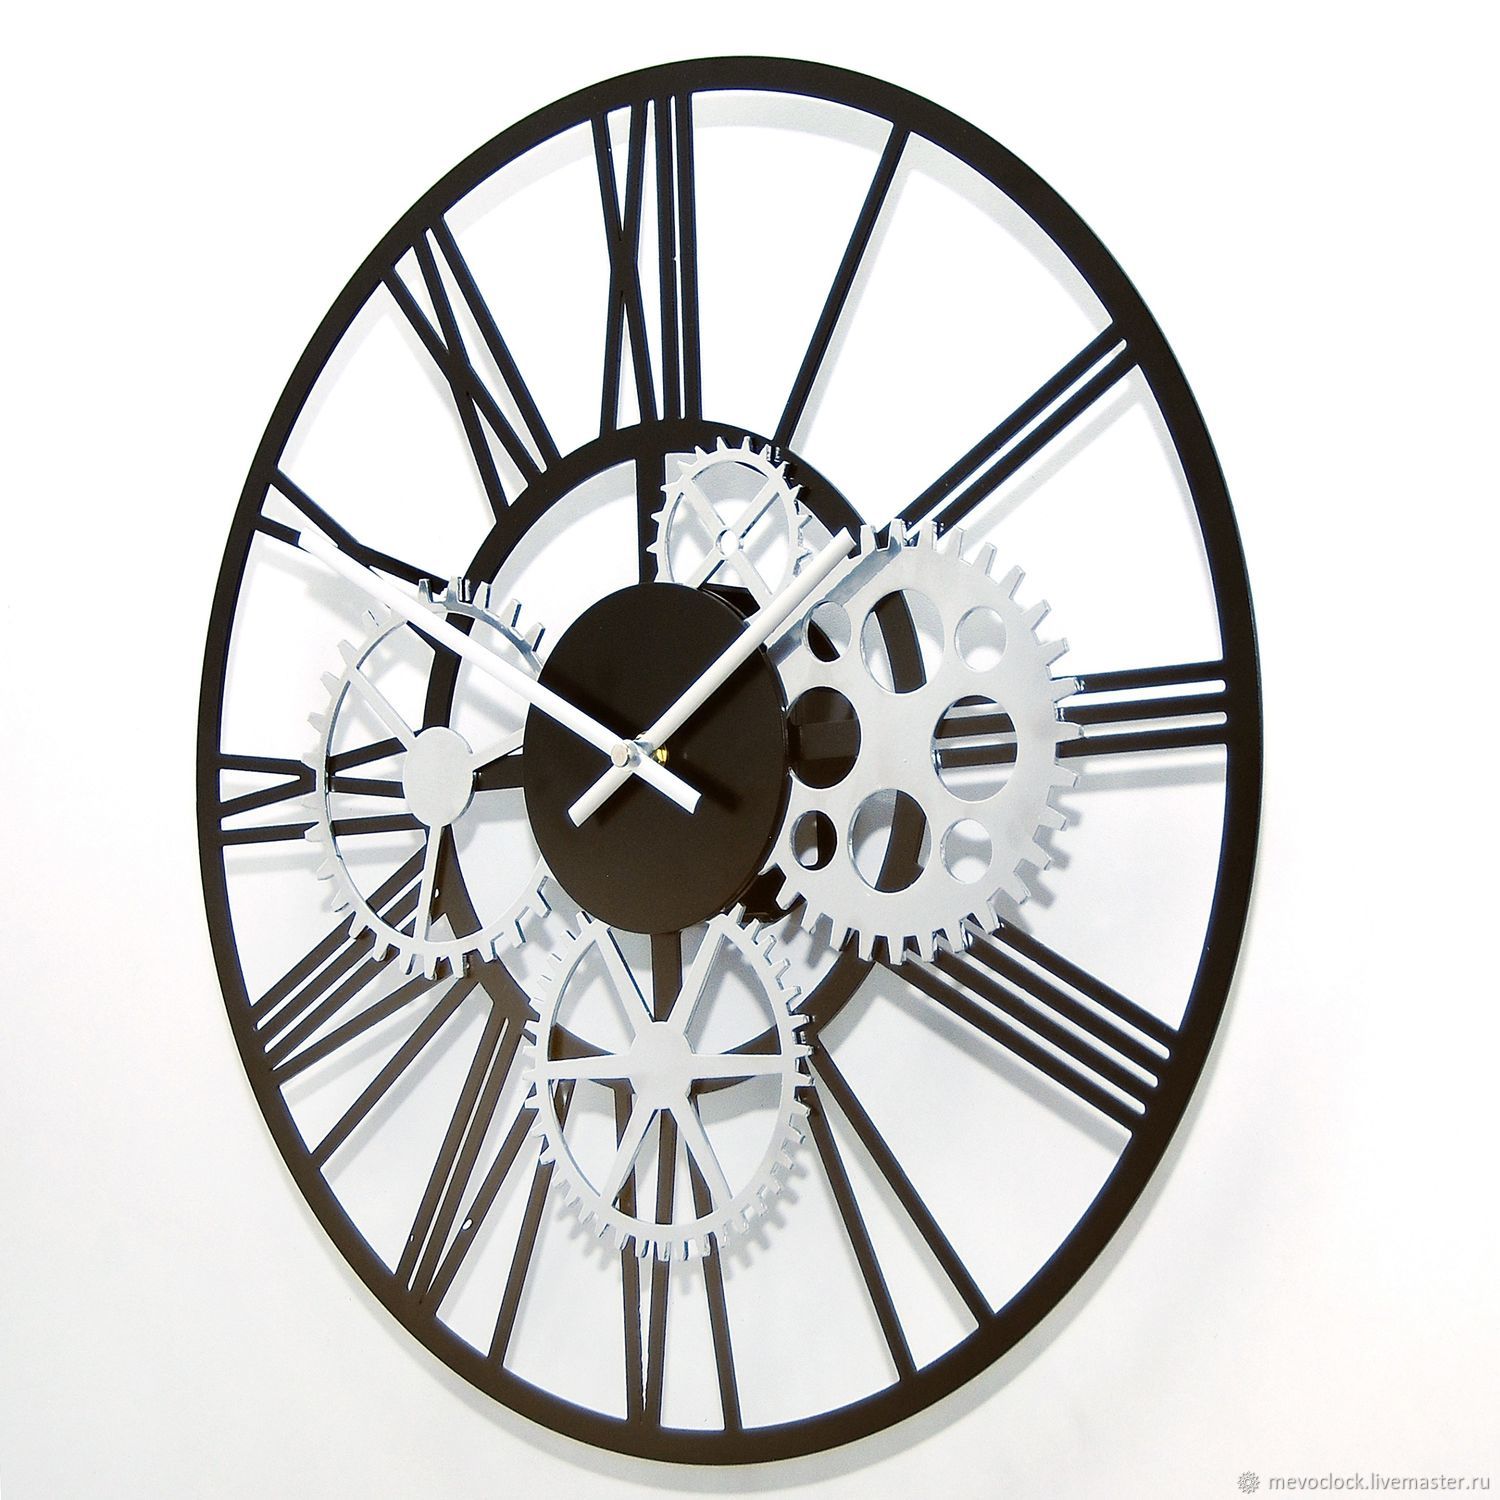 Часы настенные 60 см. Настенные часы mevoclock Рим 3d п009/1, 60 см. Часы настенные Фотон п008 белый. Настенные часы большого диаметра. Часы настенные из металла.